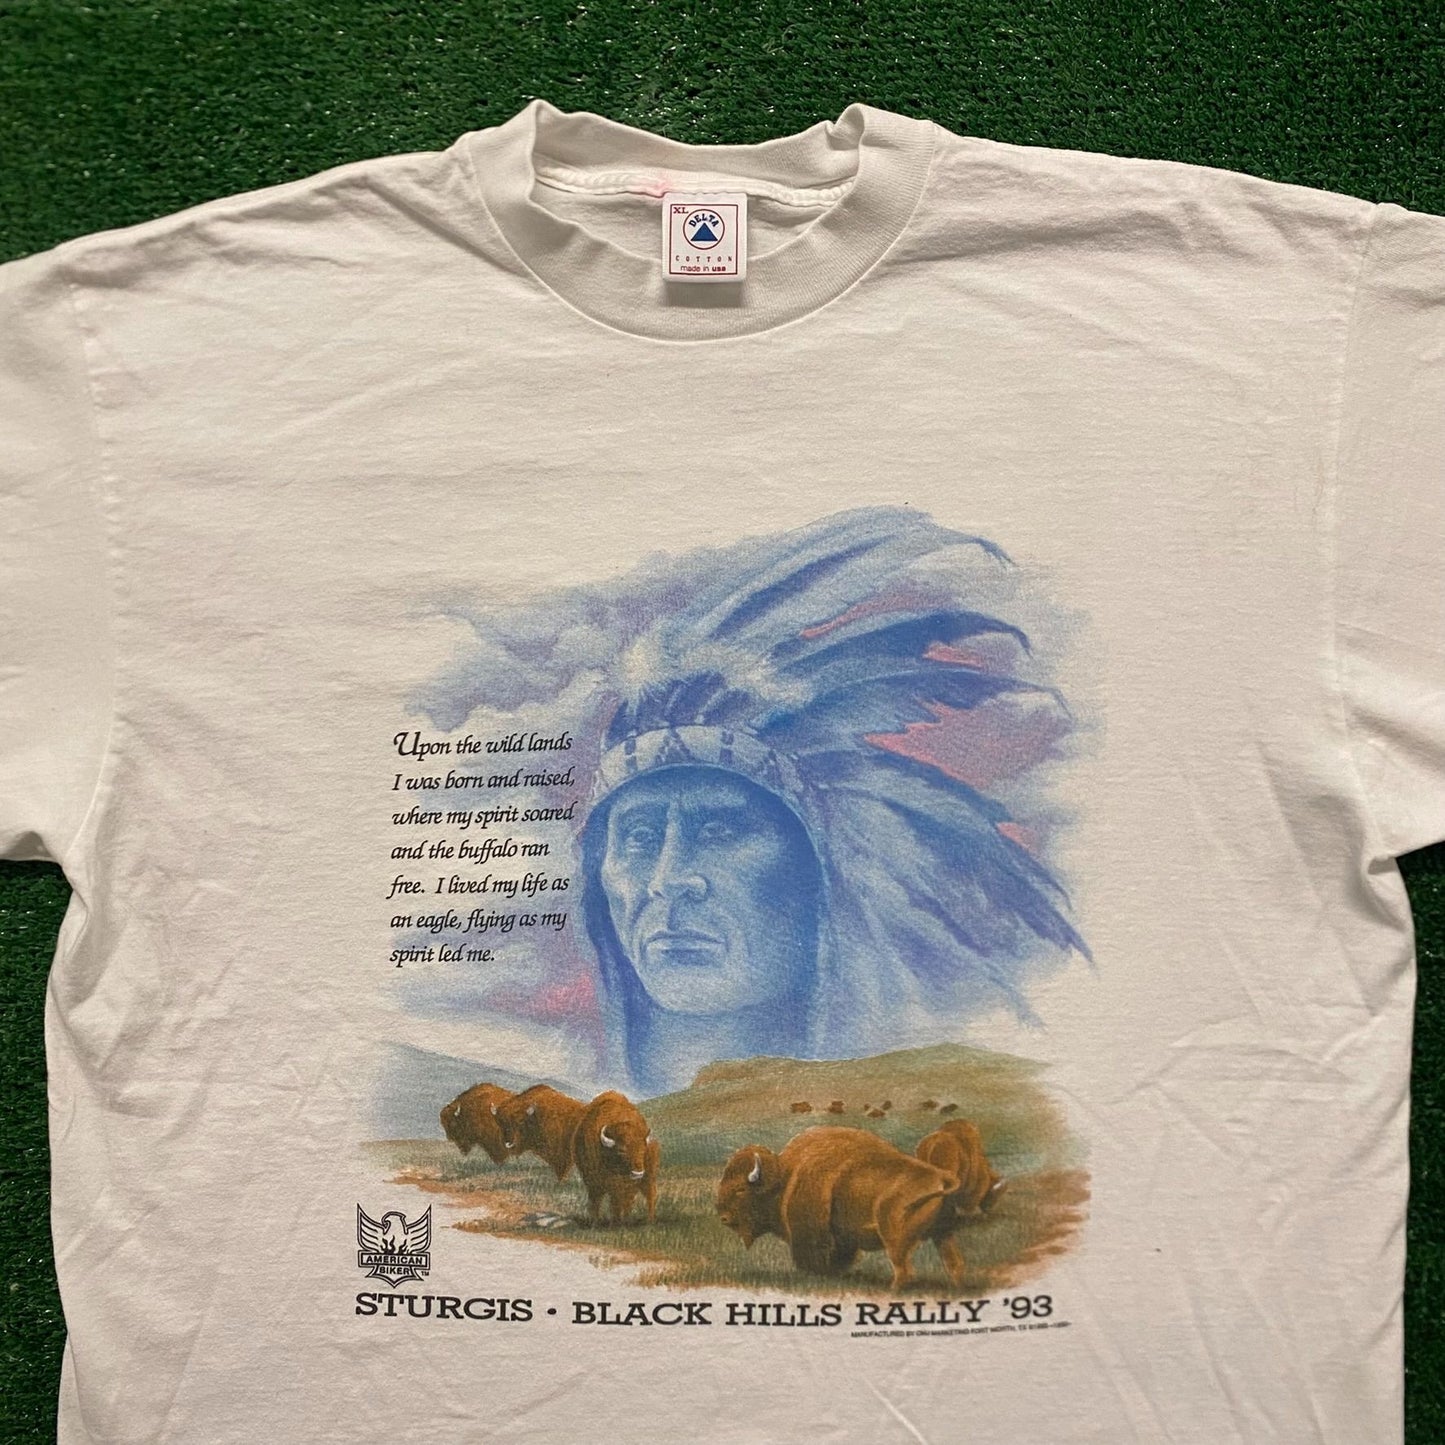 Sturgis Native Western Vintage 90s Biker T-Shirt